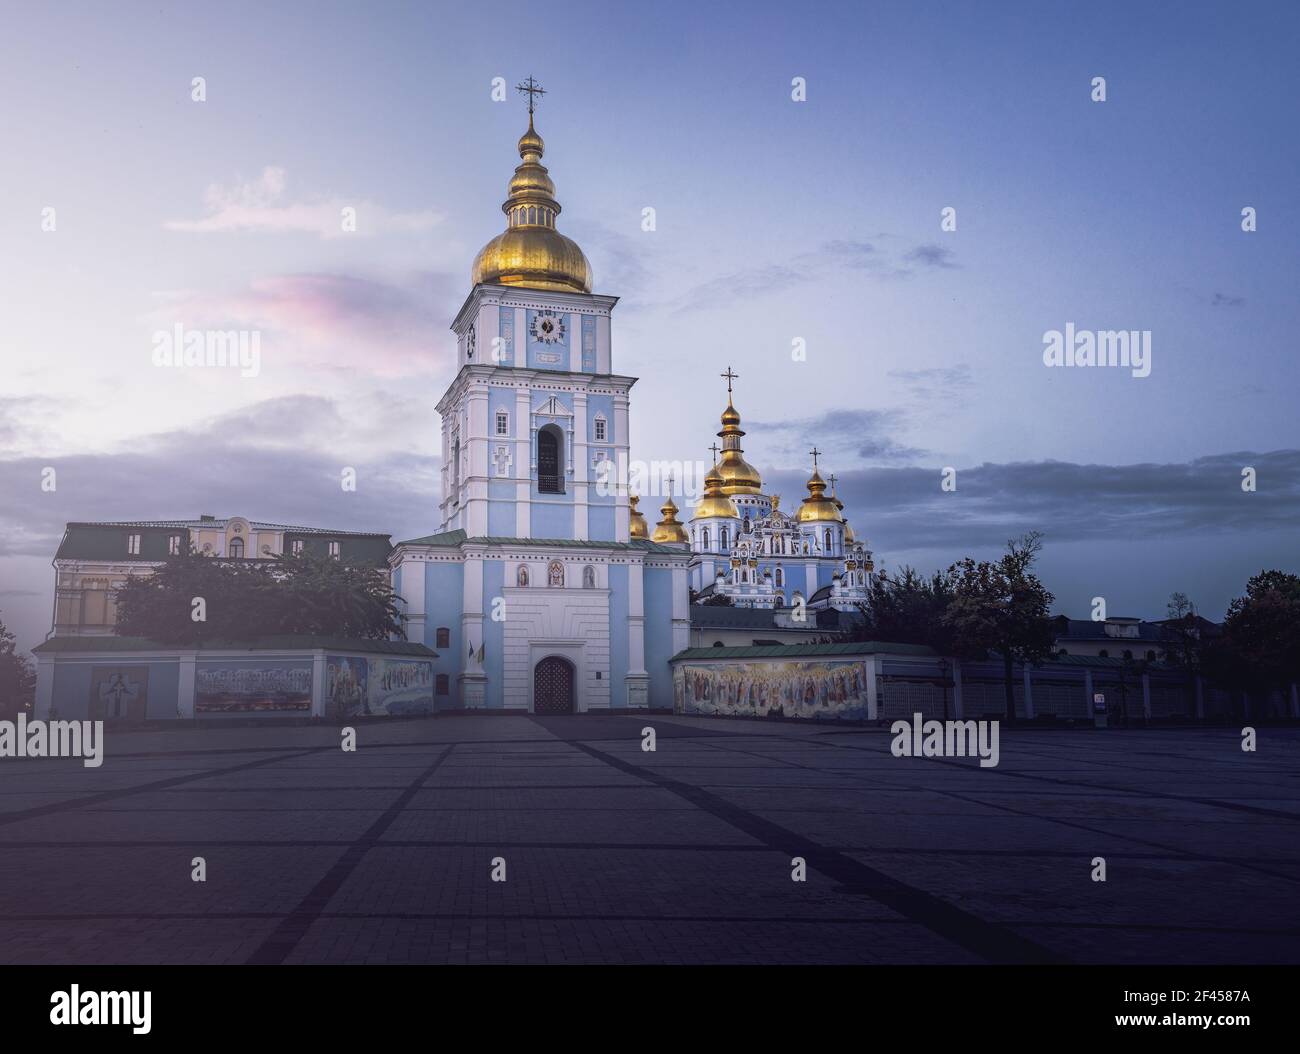 Monasterio de San Miguel de cúpulas doradas al atardecer - Kiev, Ucrania Foto de stock